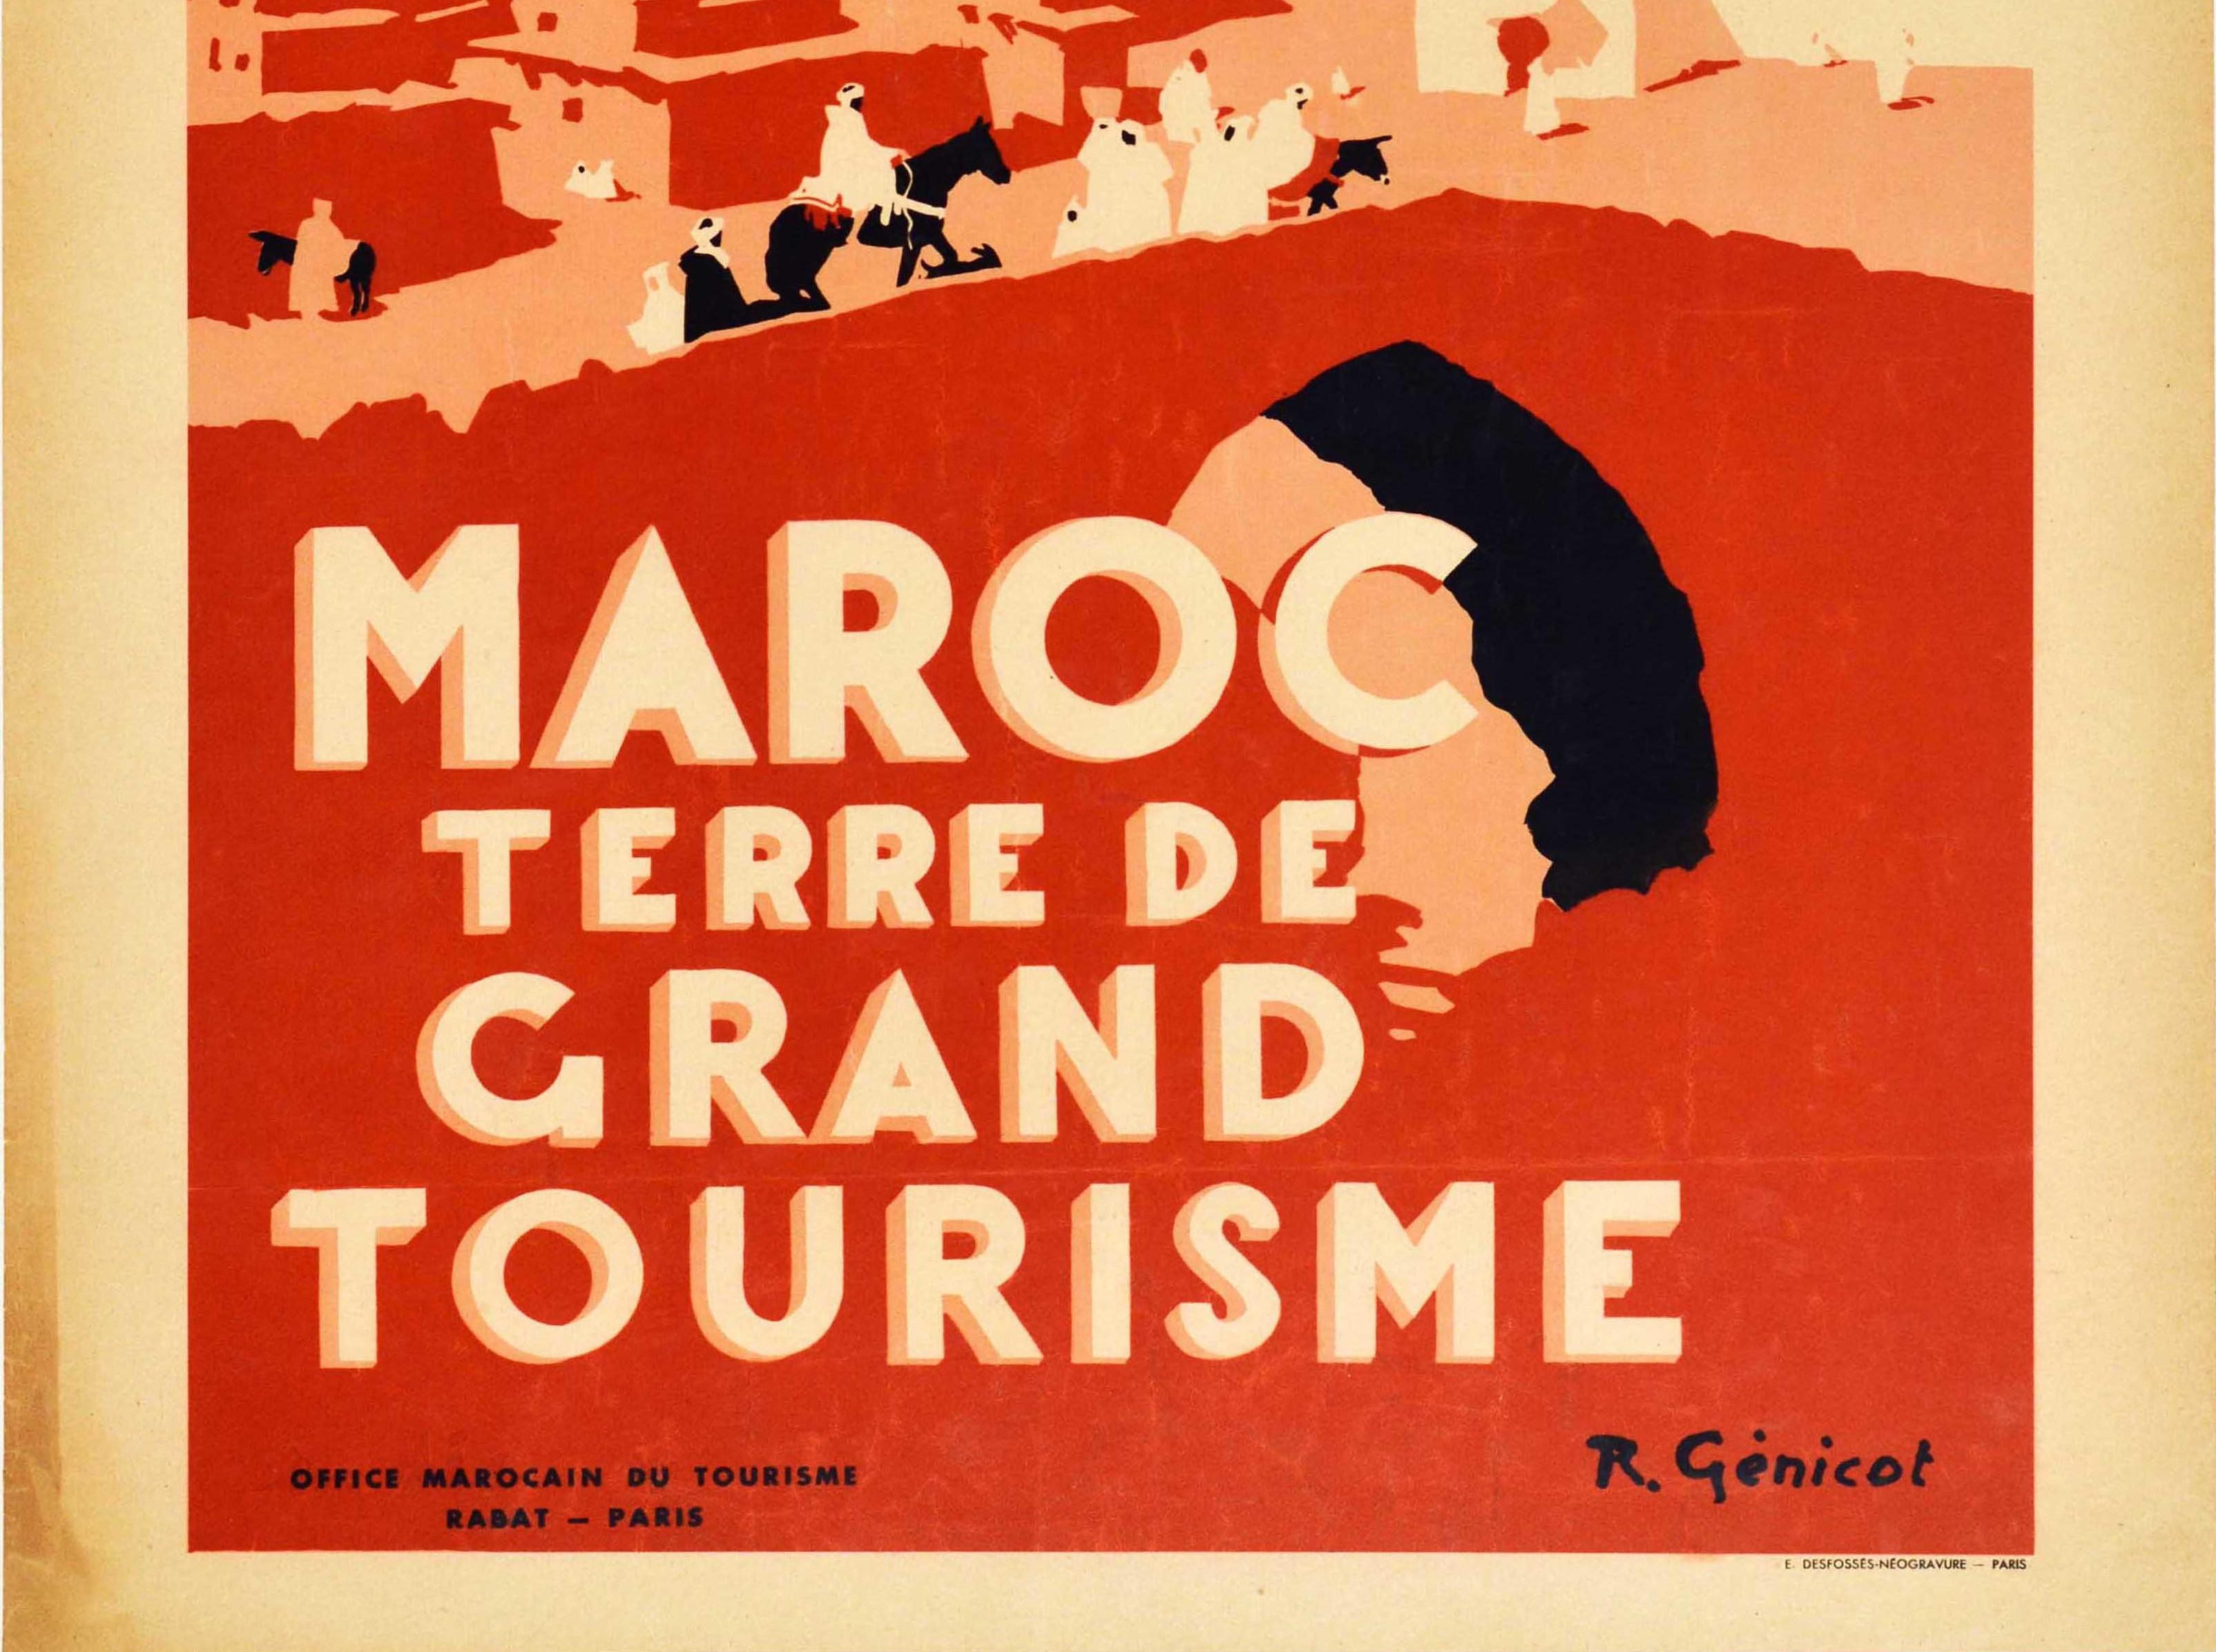 French Original Vintage Travel Poster For Morocco Africa Maroc Terre De Grand Tourisme